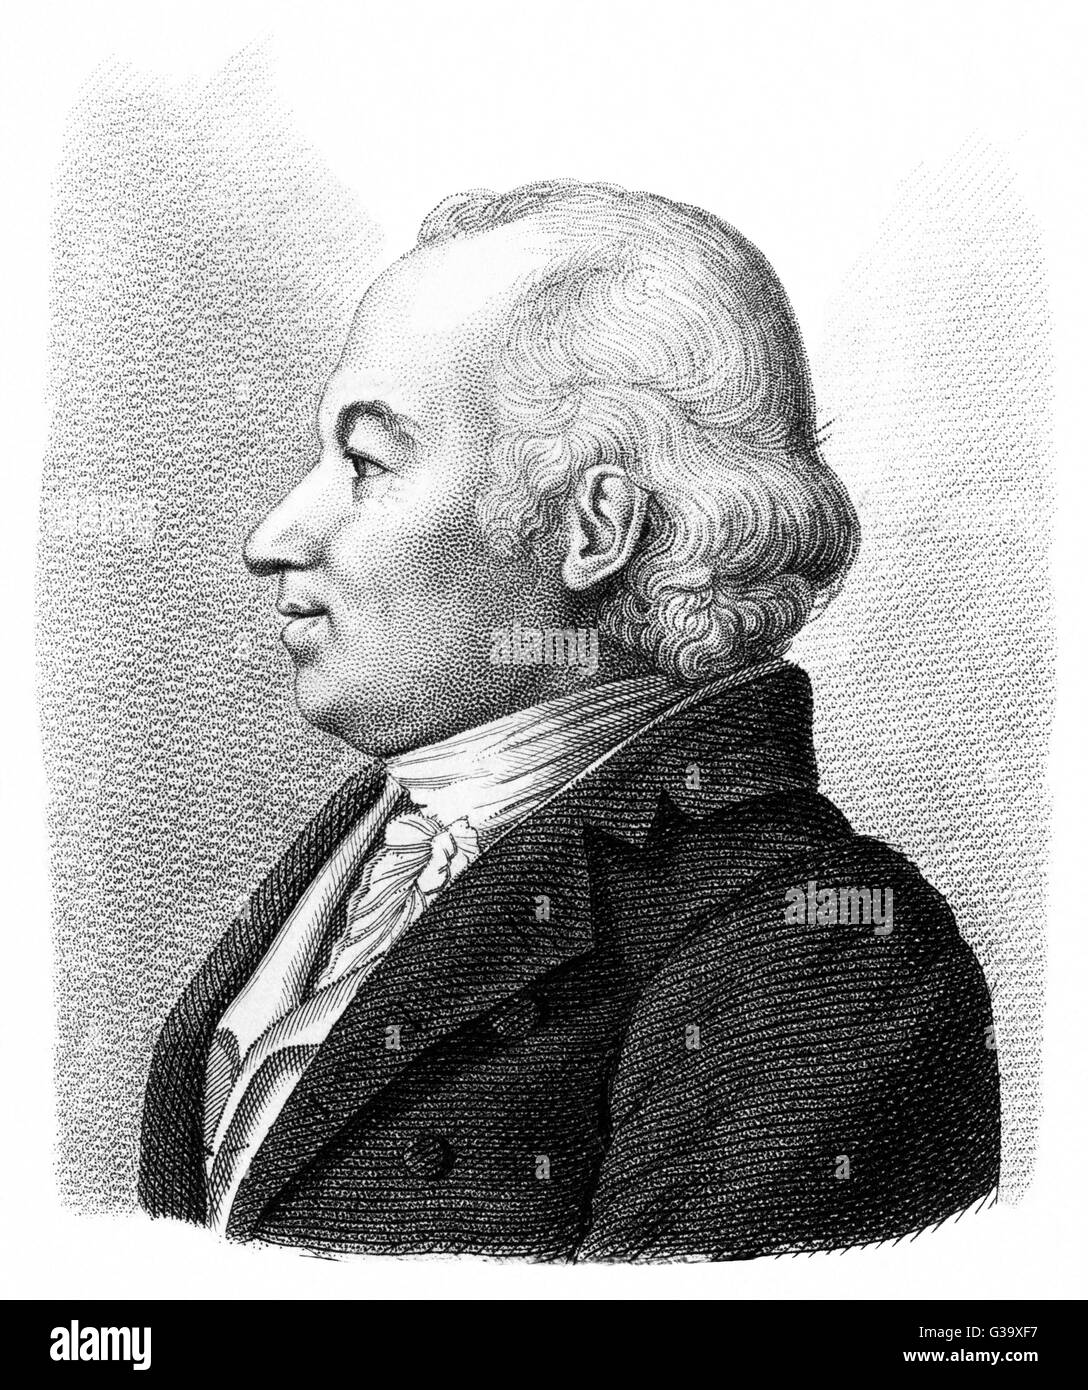 PHILIPPE PETIT-RADEL  French medical        Date: 1749 - 1815 Stock Photo